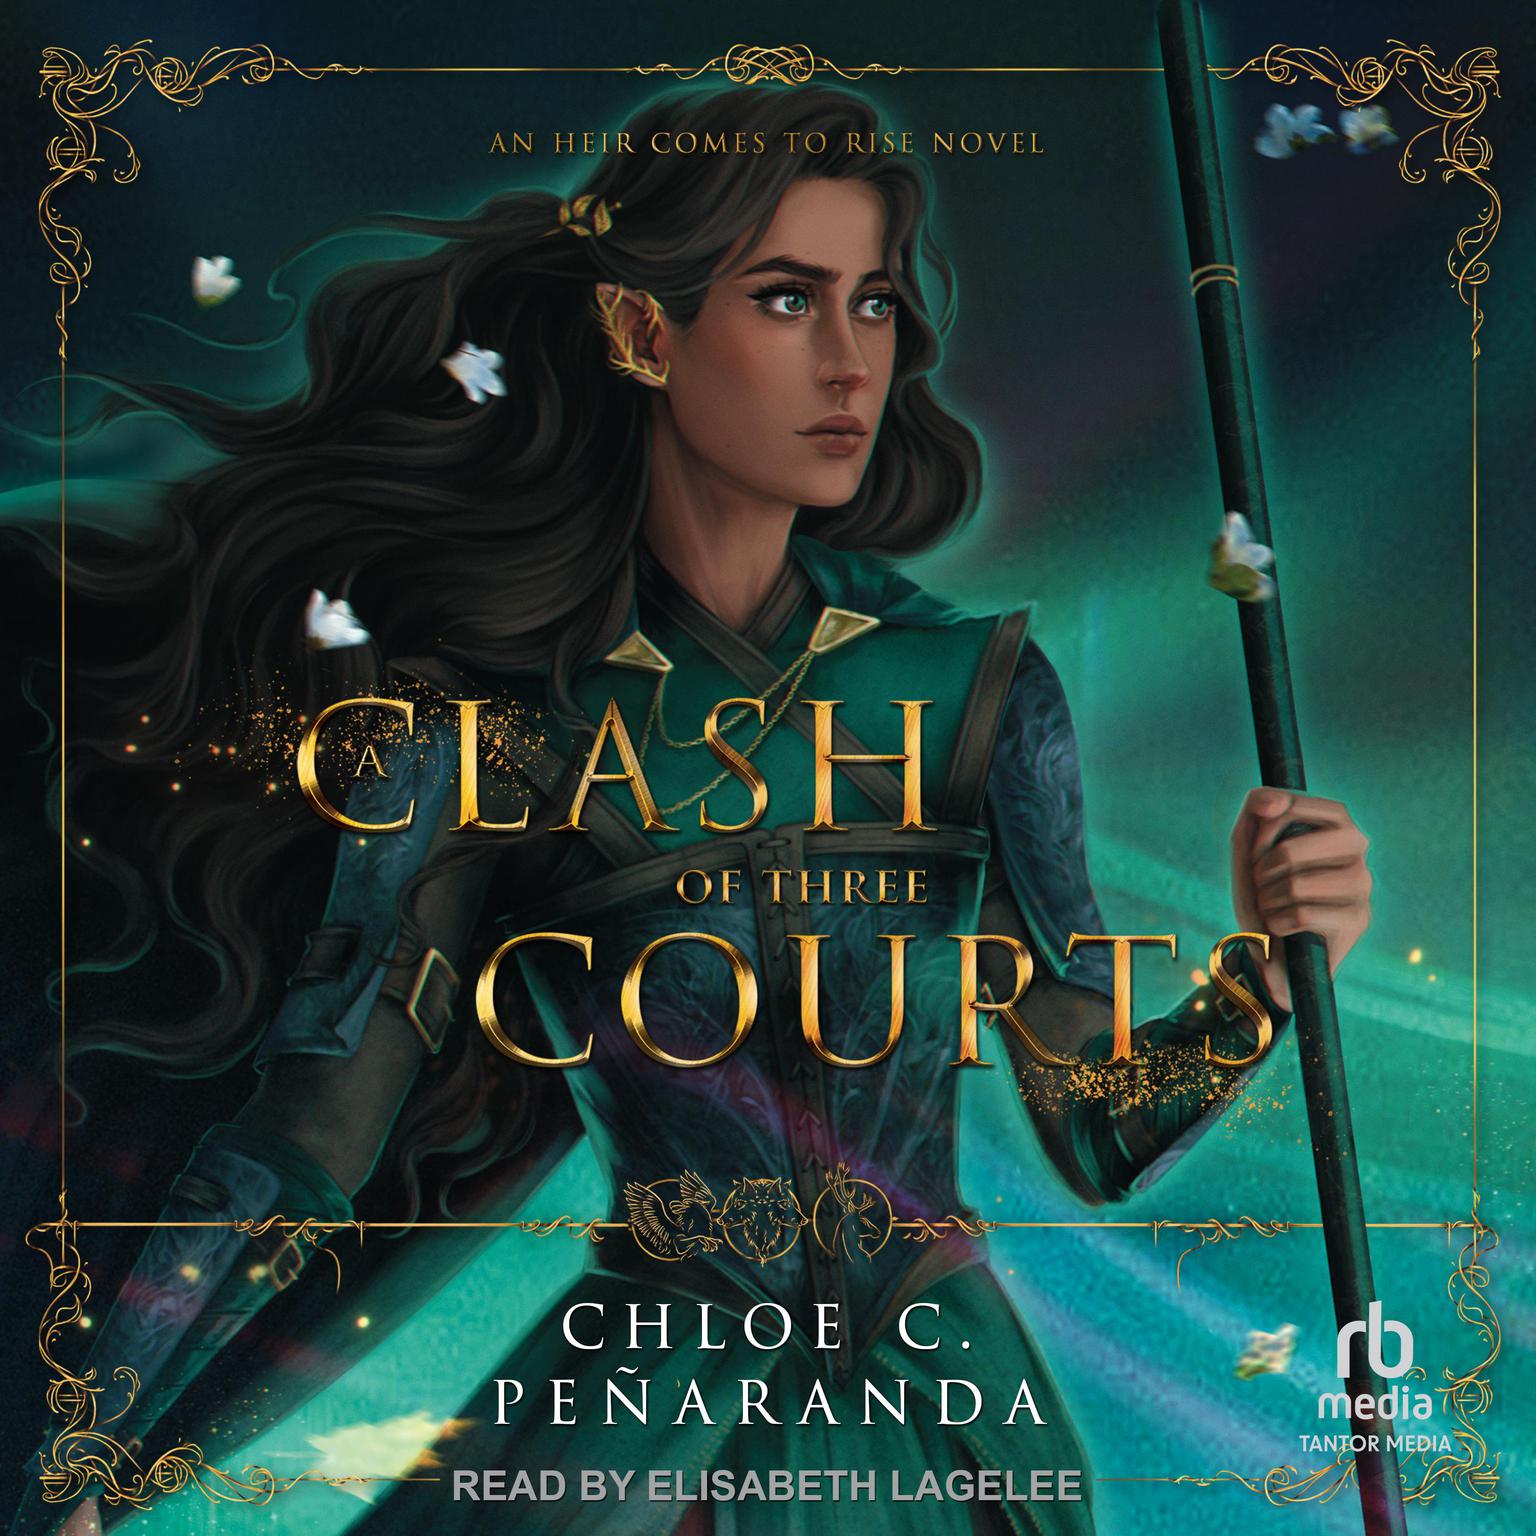 A Clash of Three Courts Audiobook by Chloe C Peñaranda Download Now